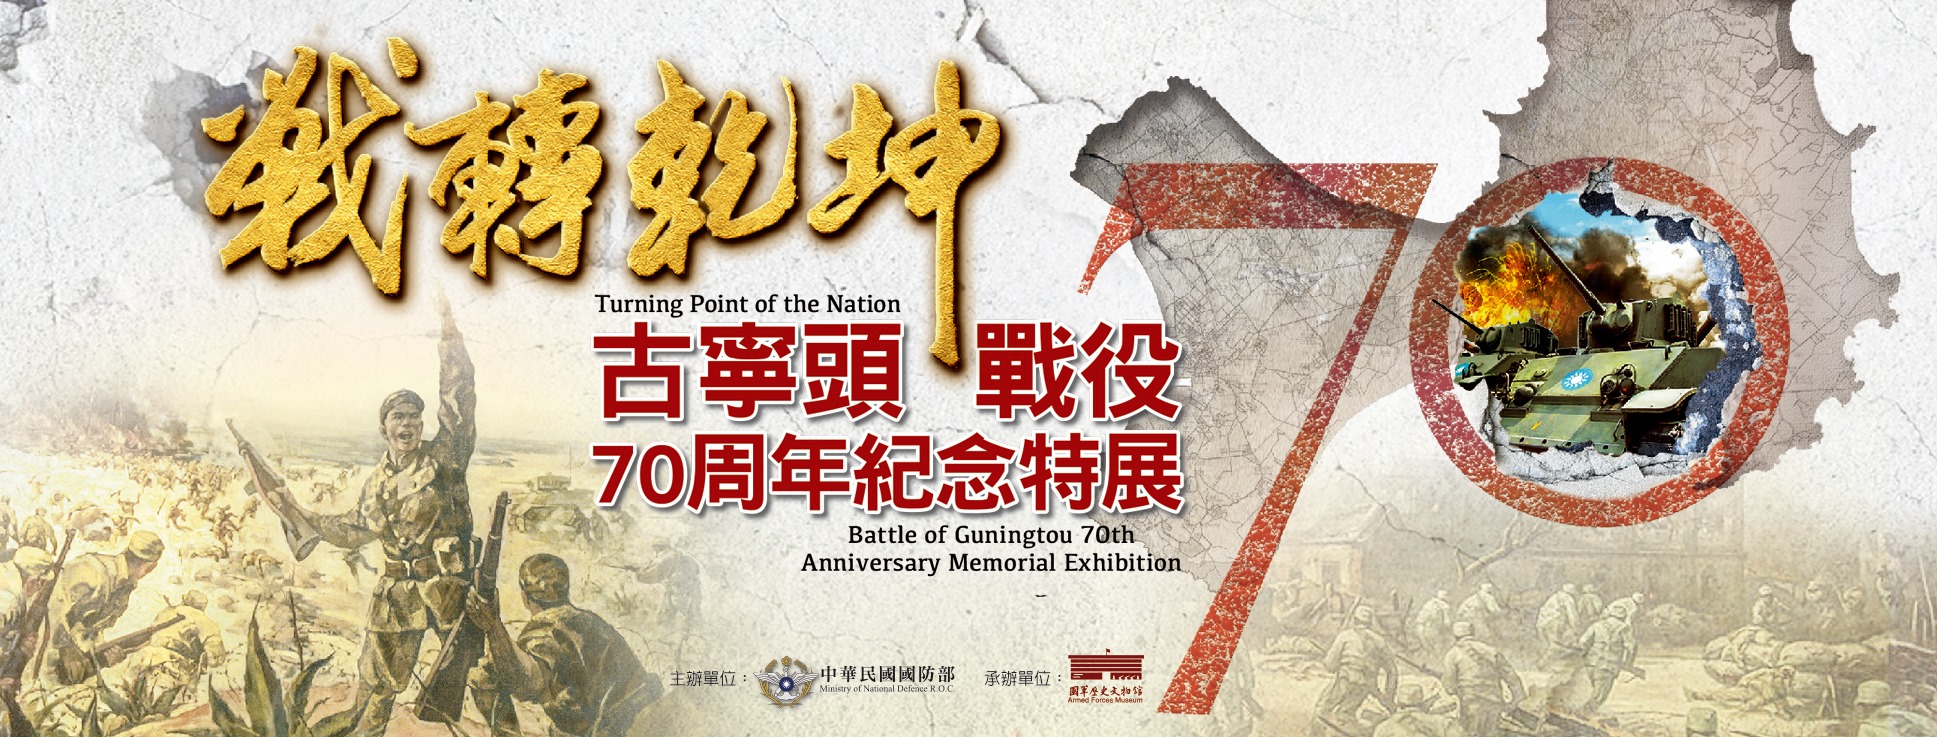 Battle of Guningtou 70th Anniversary